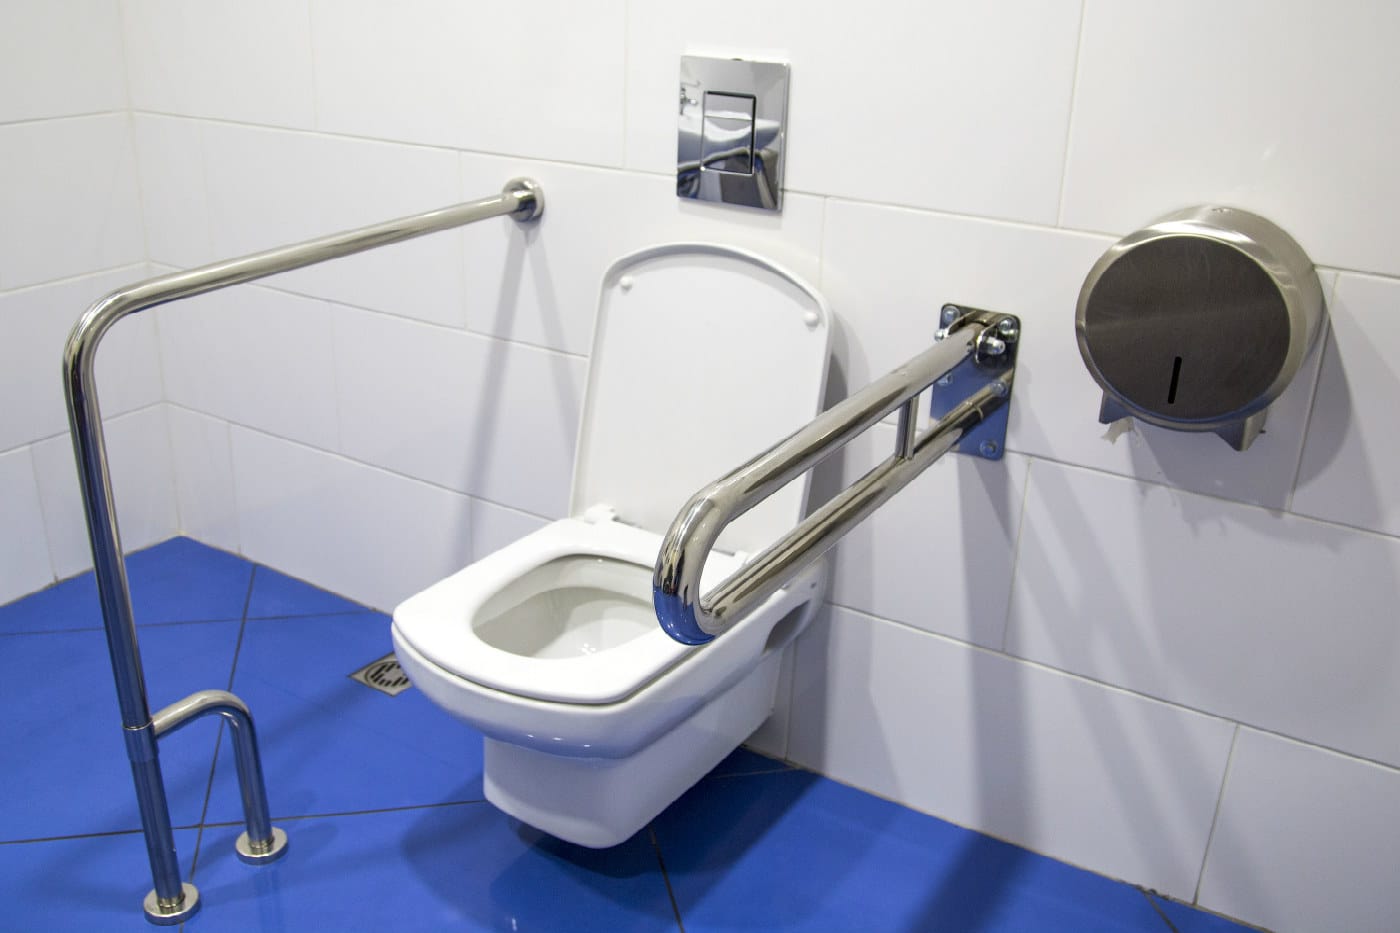 Bathroom Grab Bars For Elderly Safety Aids